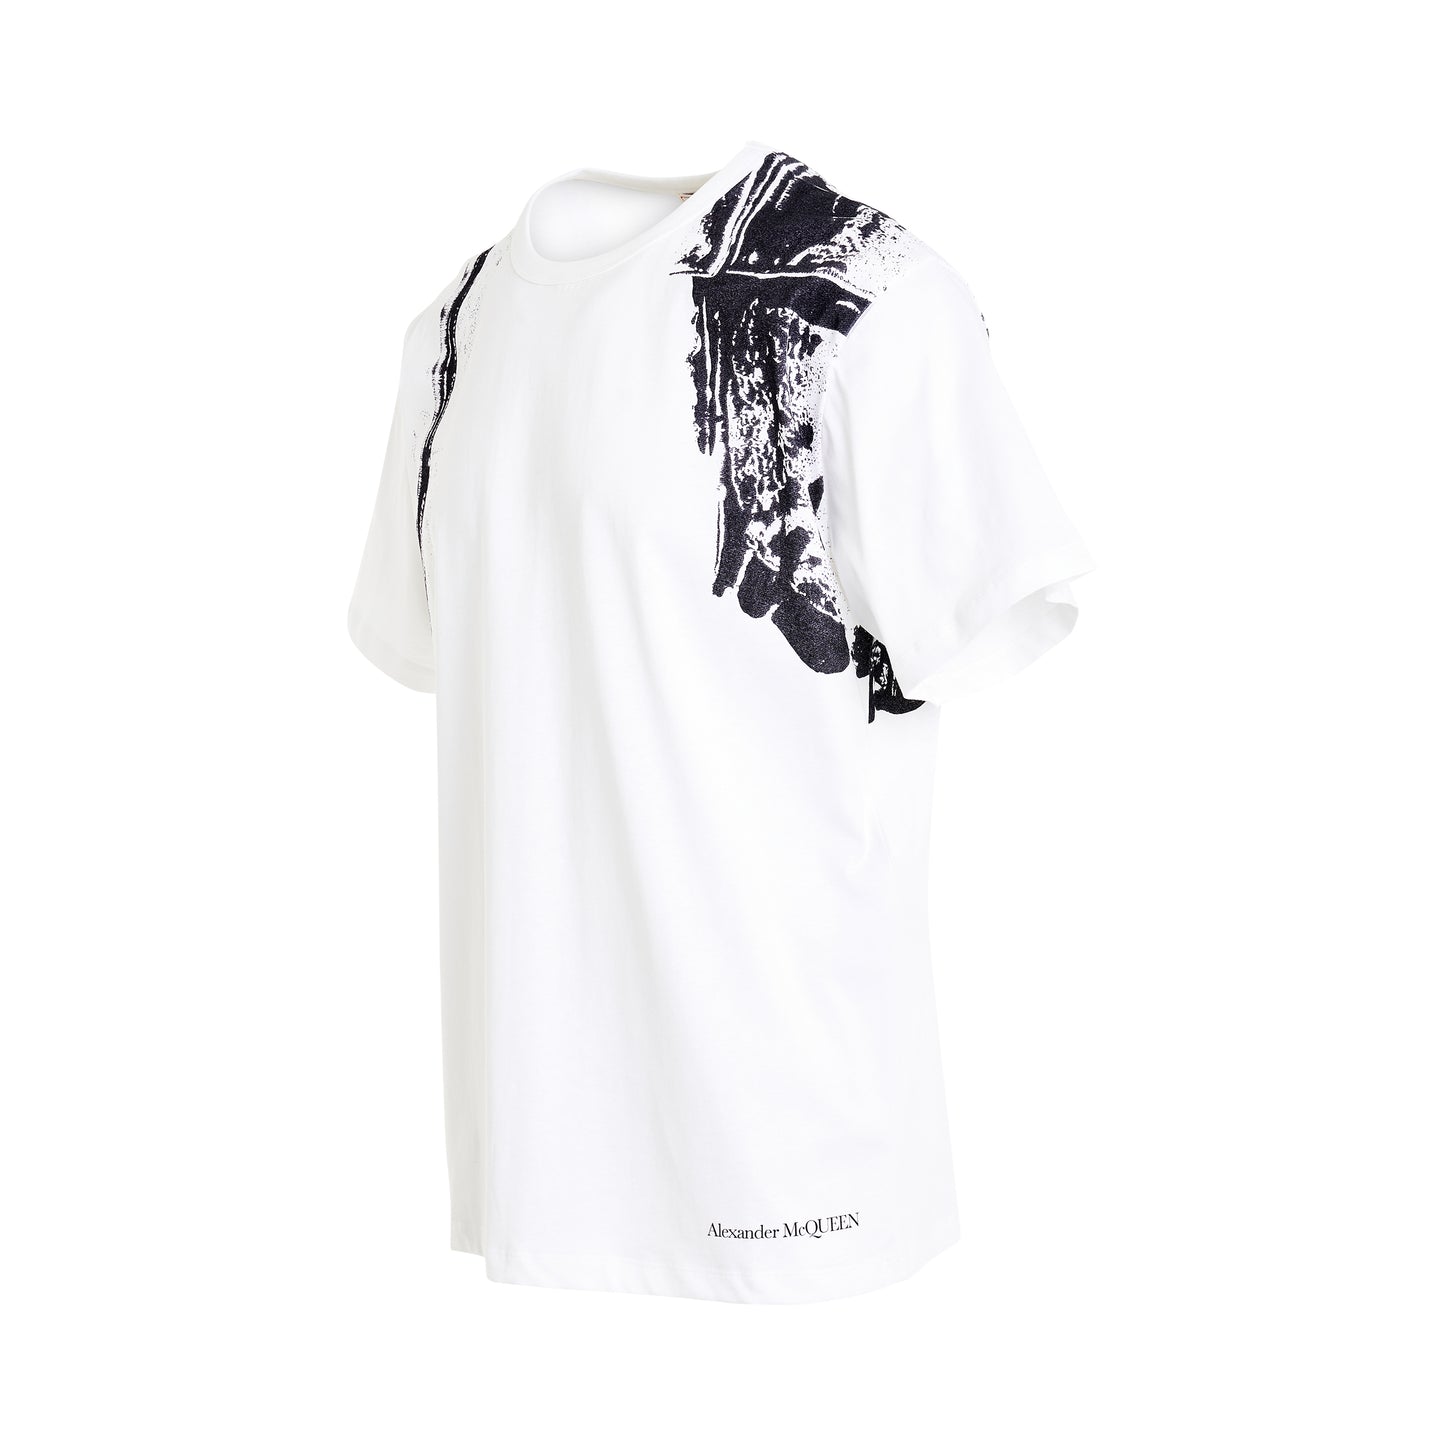 Harness Print T-Shirt in White/Black